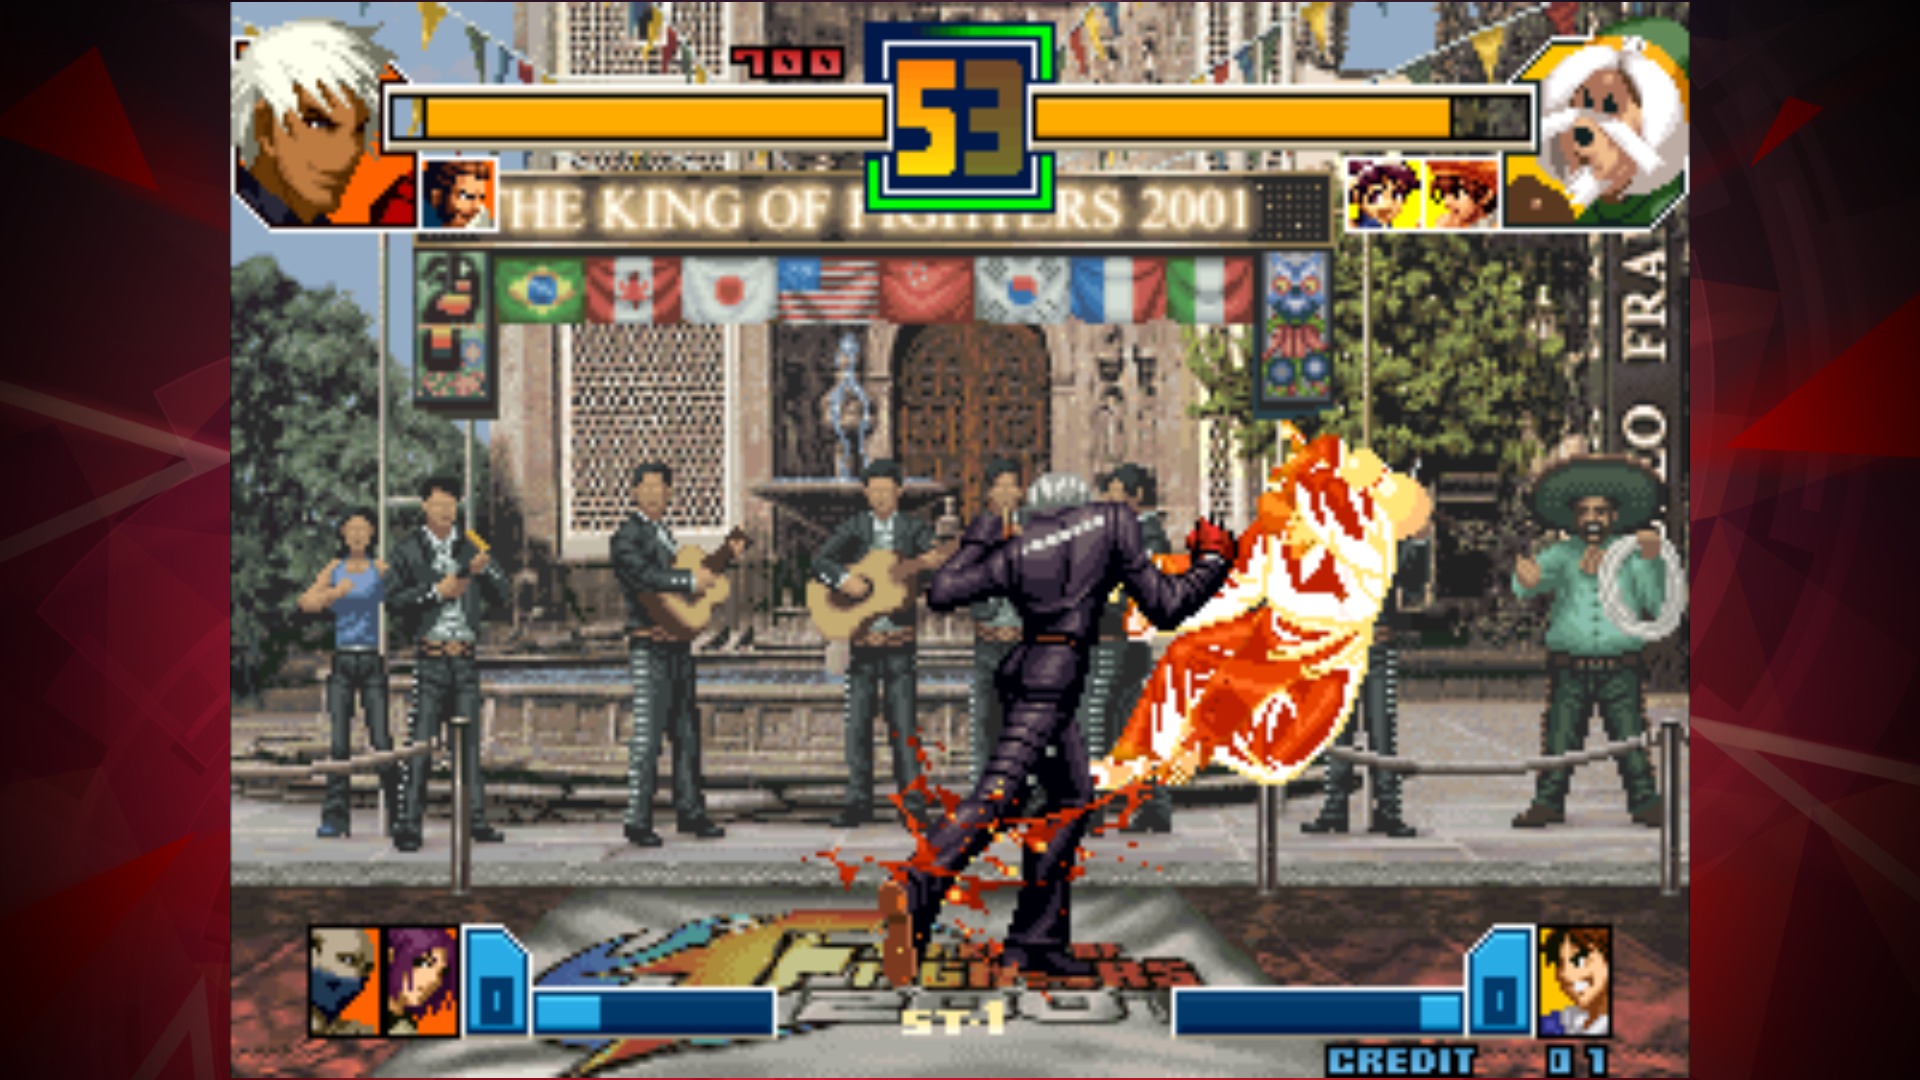 The King of Fighters 2001 ACA NeoGeo